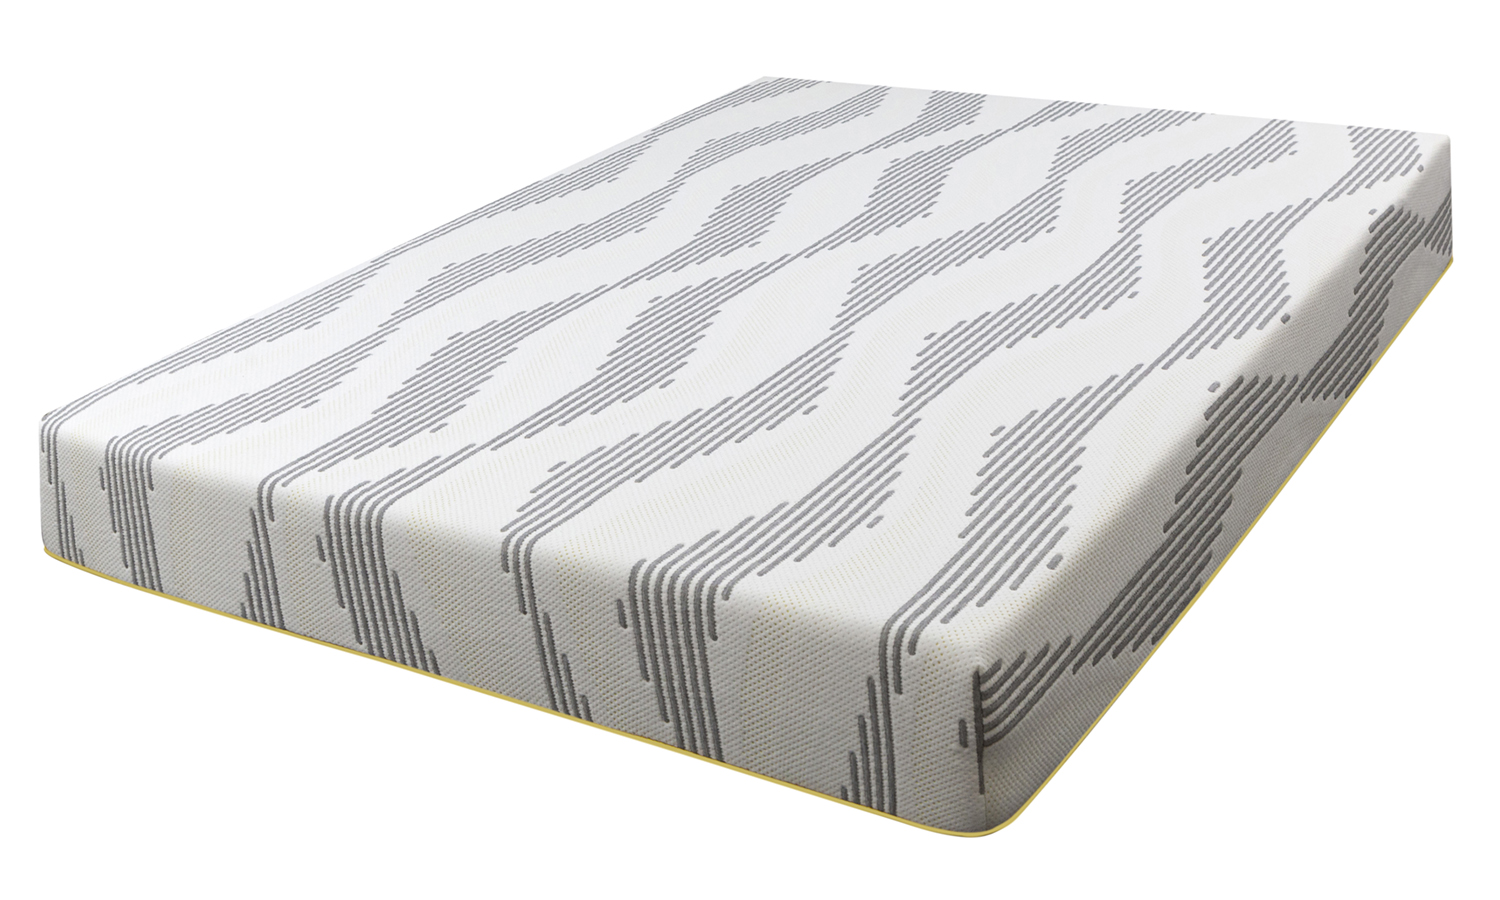 cover mattress like upholstery fabric